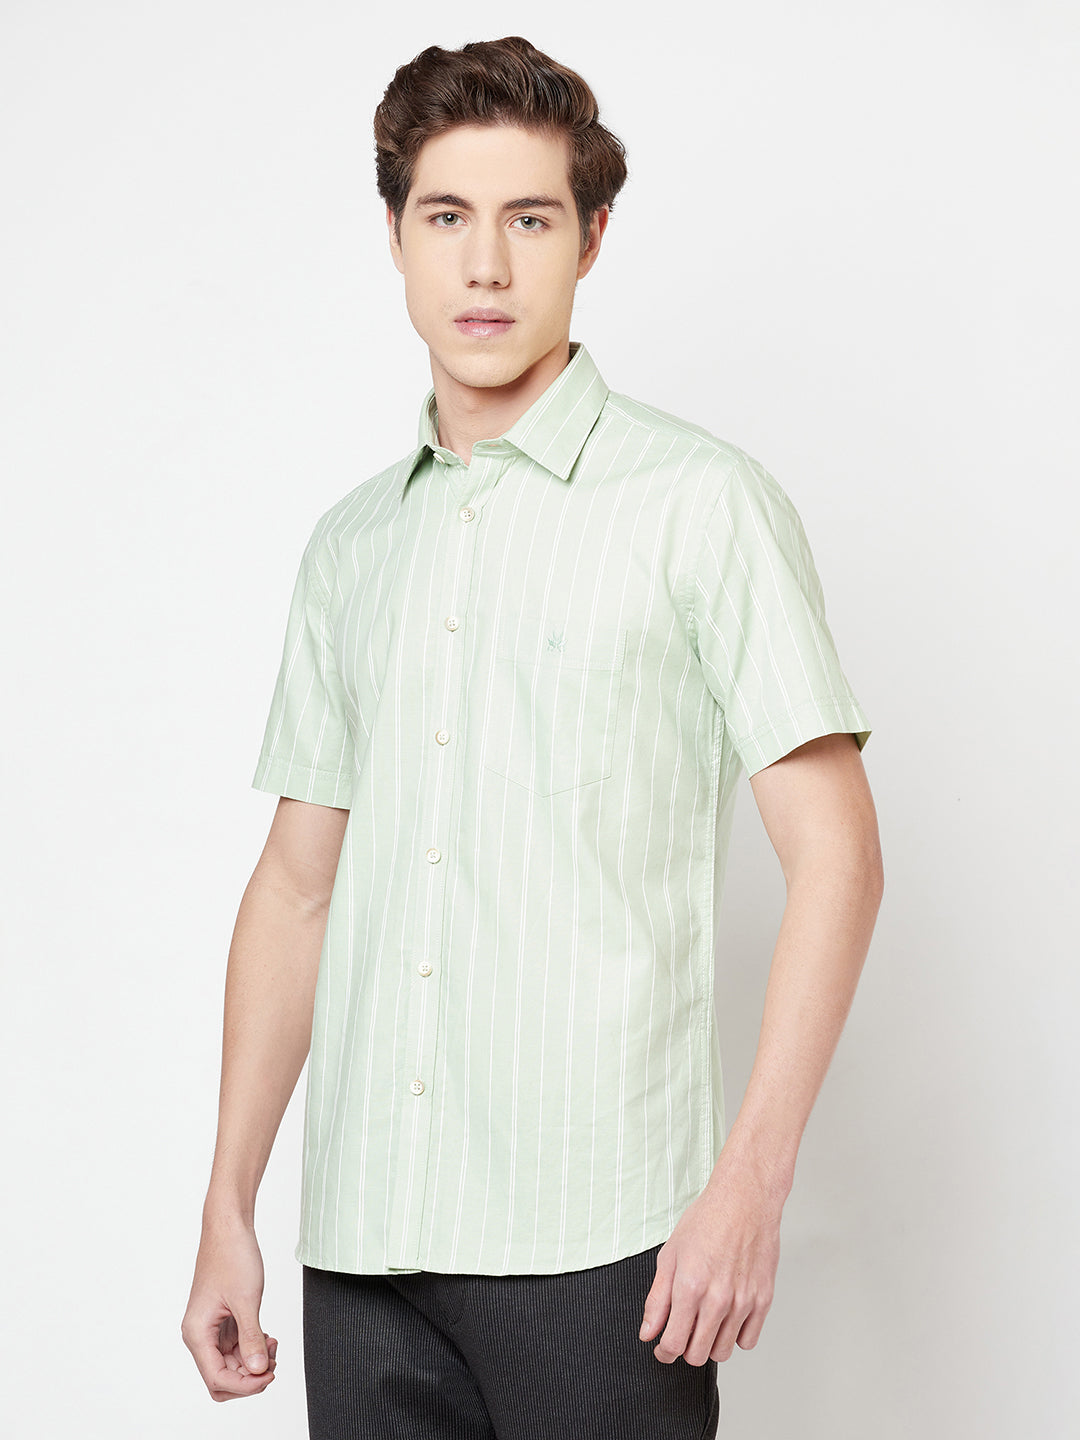 Mint Green Striped Shirt - Men Shirts